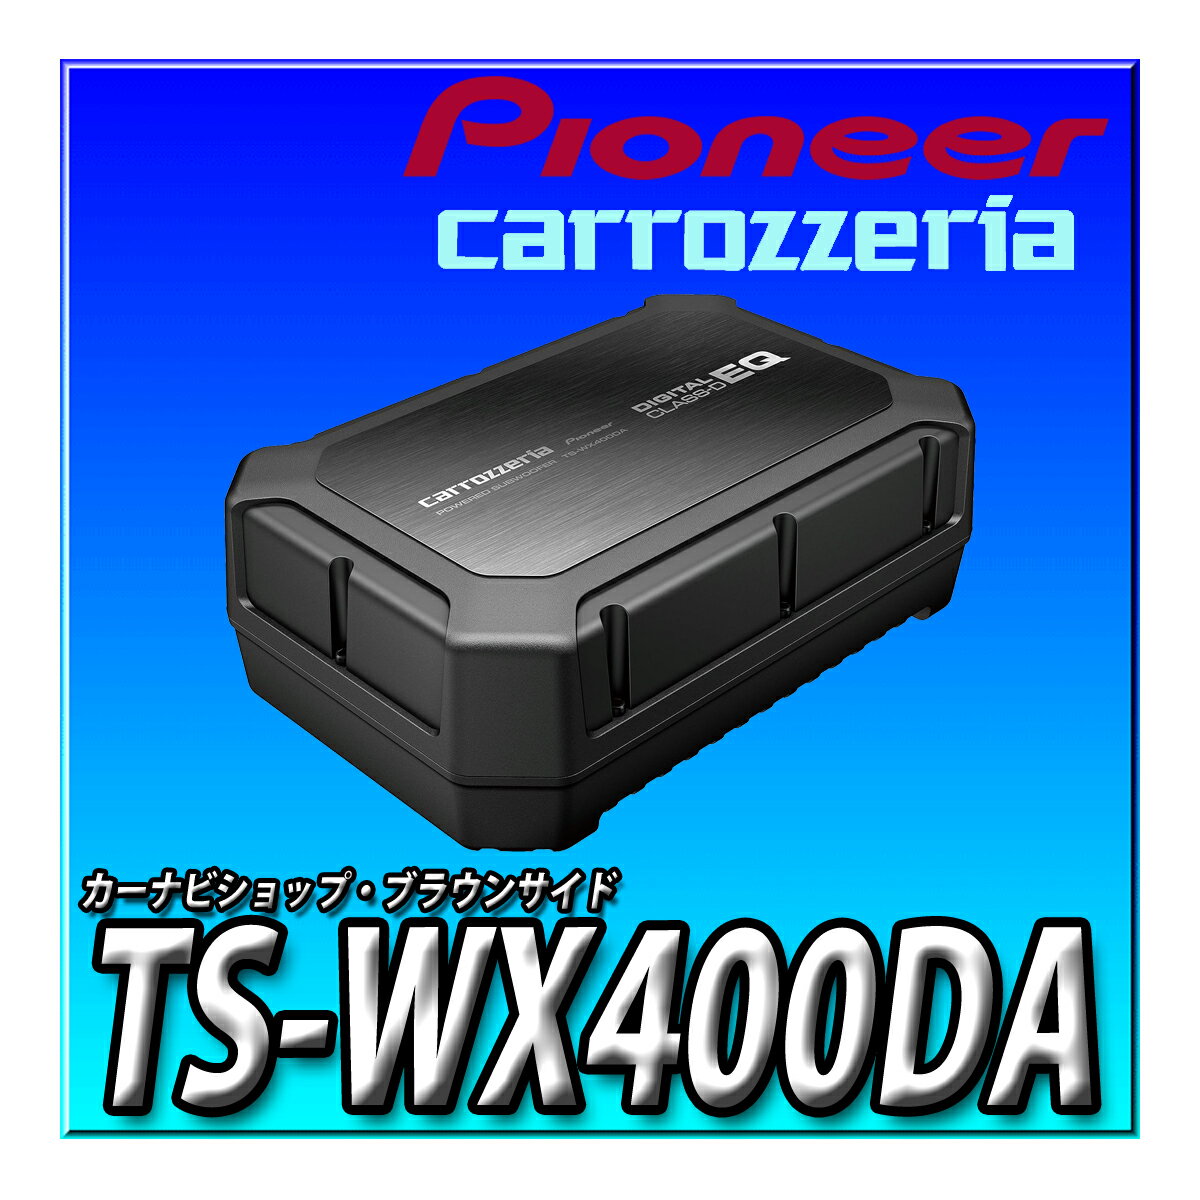 TS-WX400DA Pioneer パイオニア スピーカー サブウーファー 24cm×14cm パワードサブウーファー カロッ..